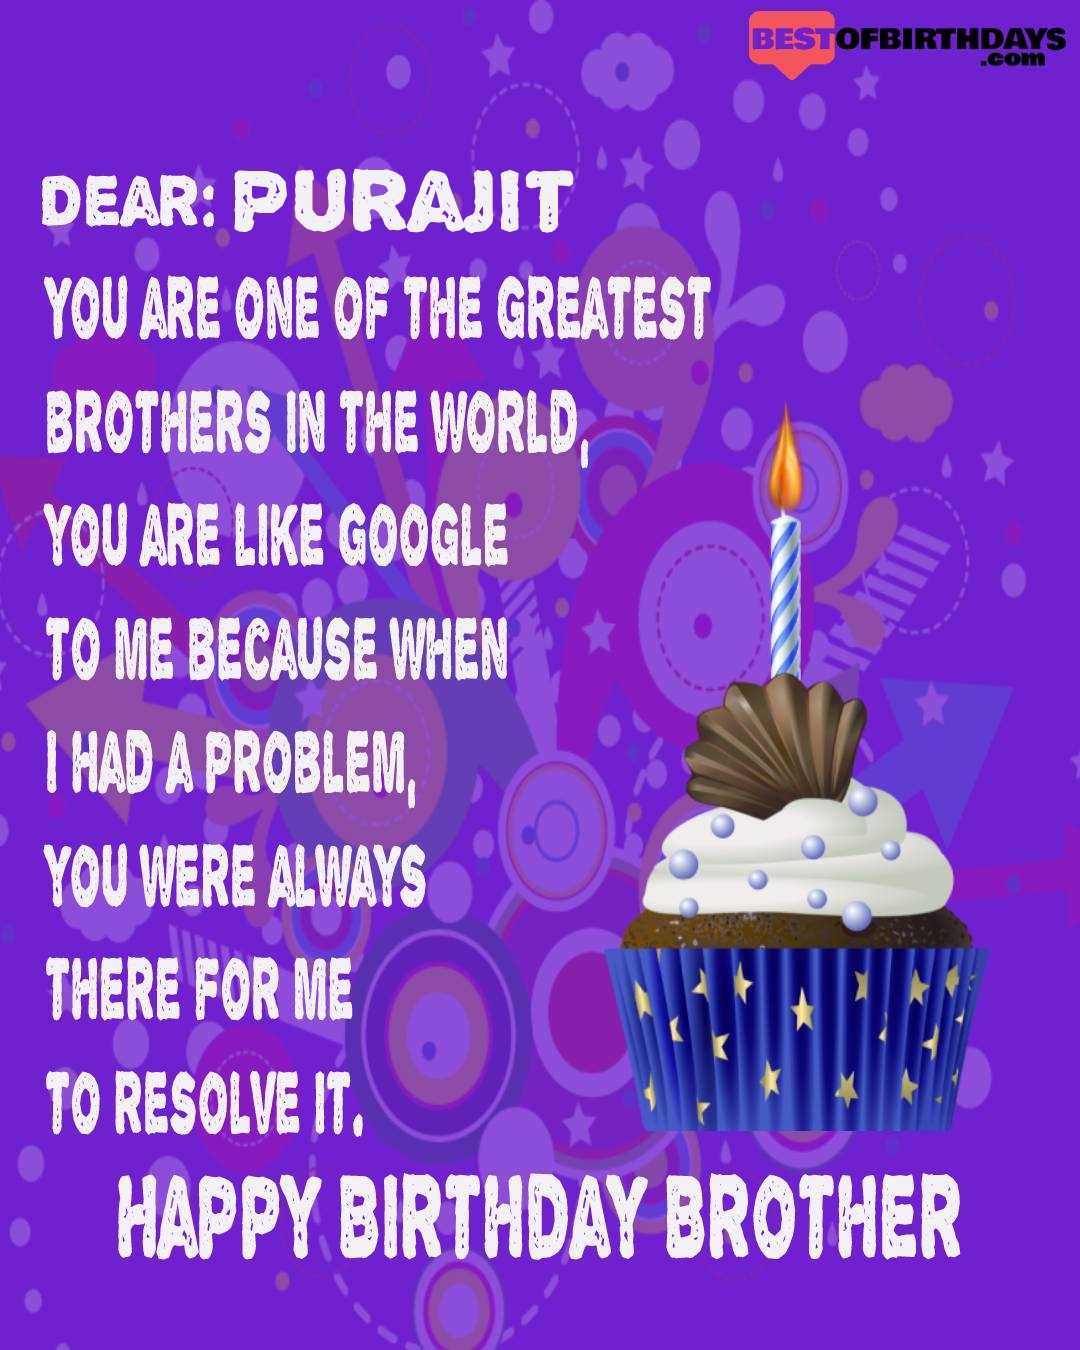 Happy birthday purajit bhai brother bro